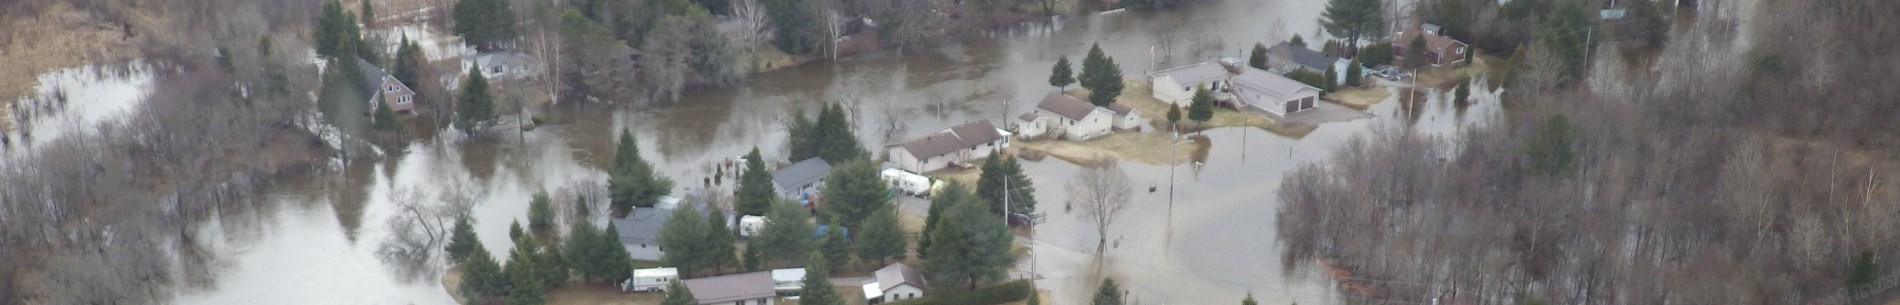 Flooded river and neighbourhood